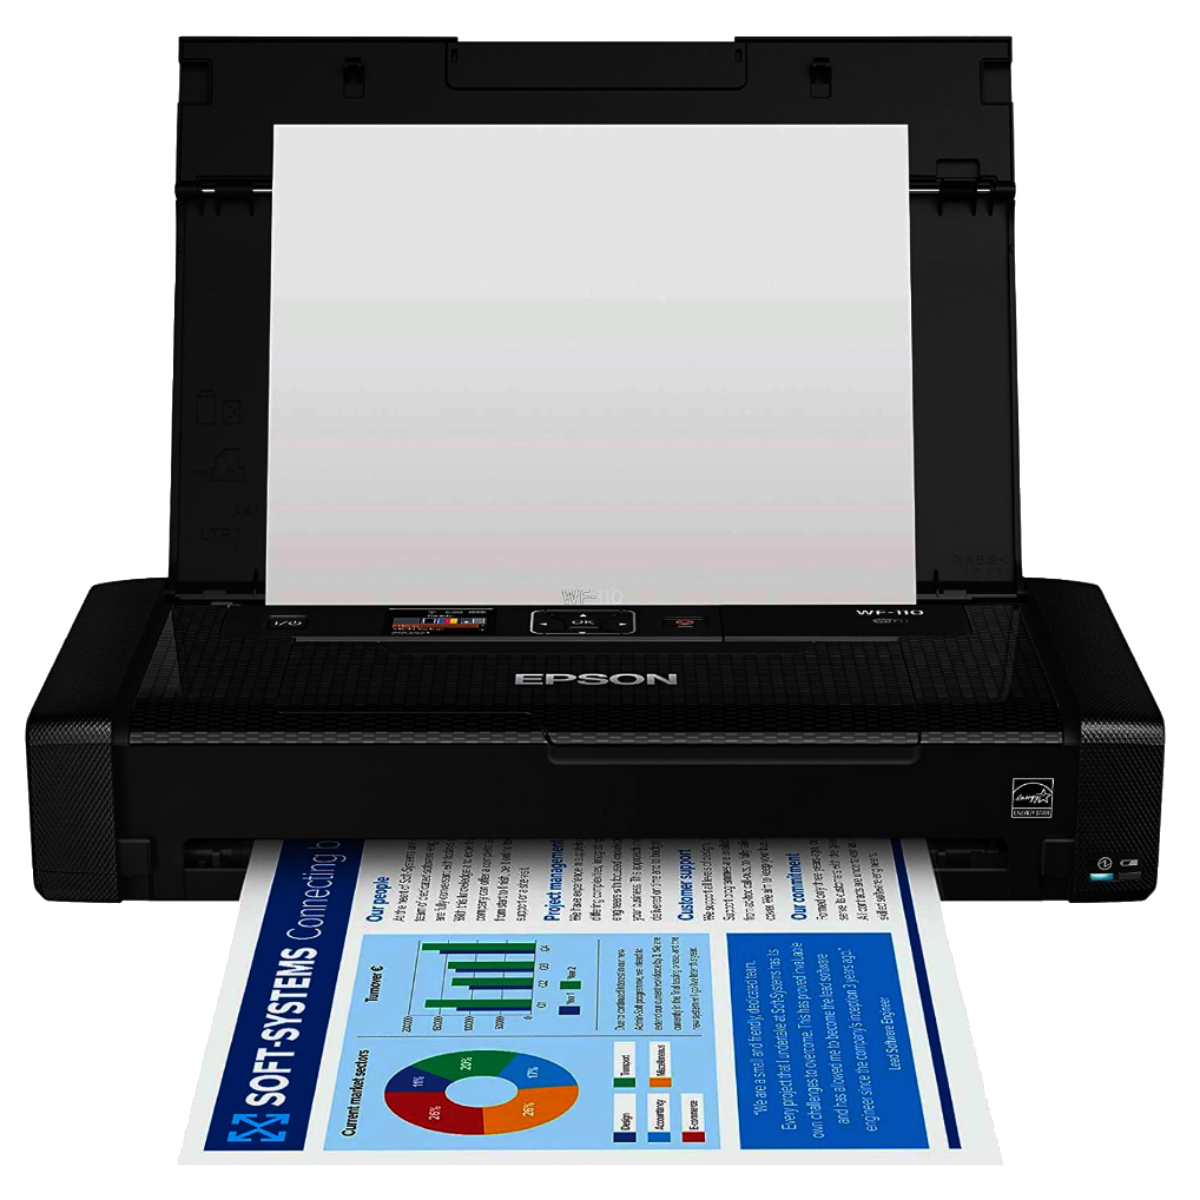 An Epson Workforce WF-110 portable printer